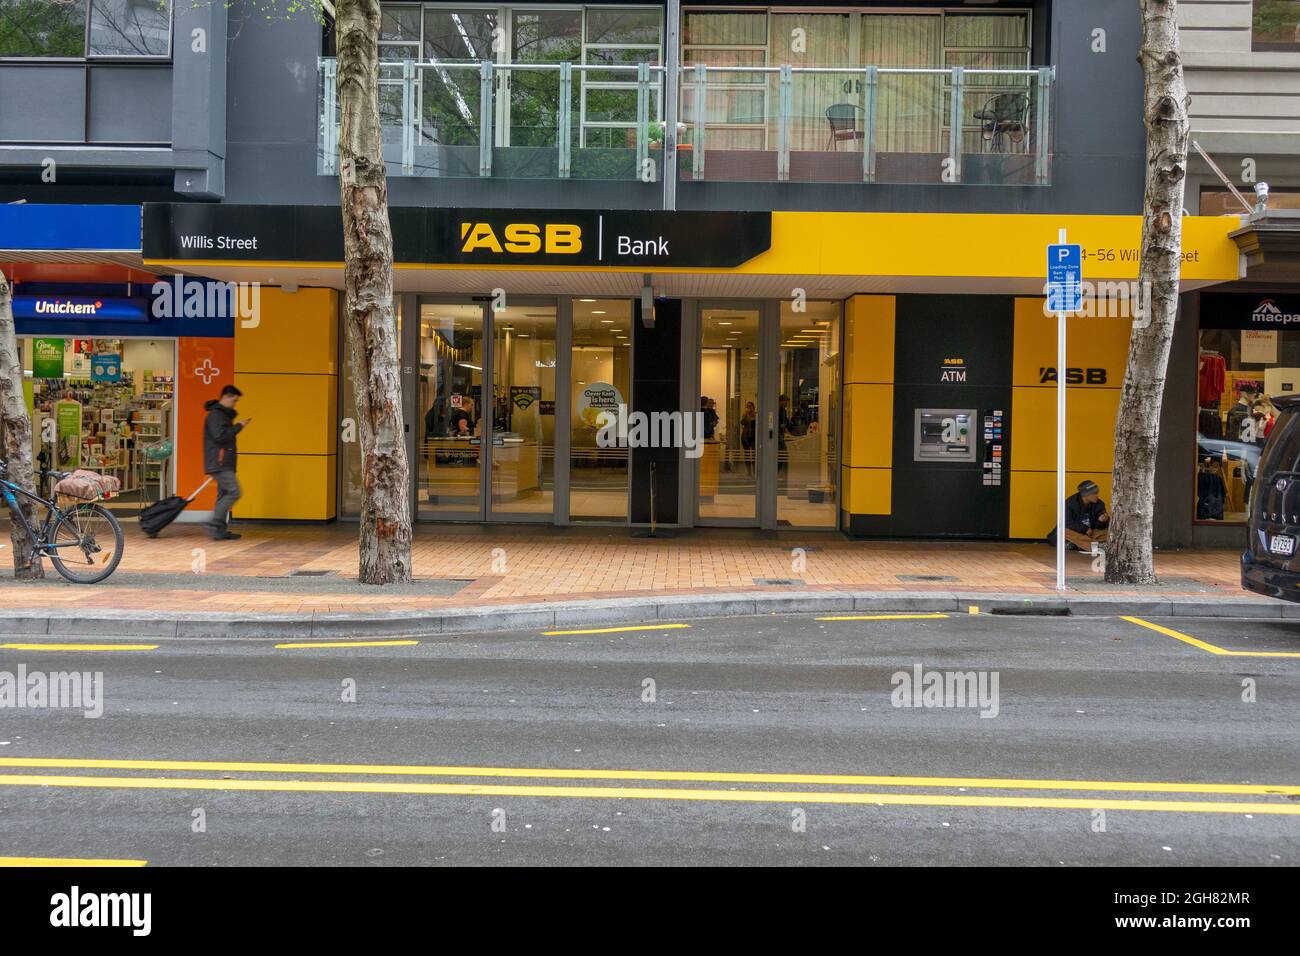 ASB Bank On Willis Street Wellington New Zealand Owned By The Commonwealth Bank of Australia (CommBank) Stock Photo